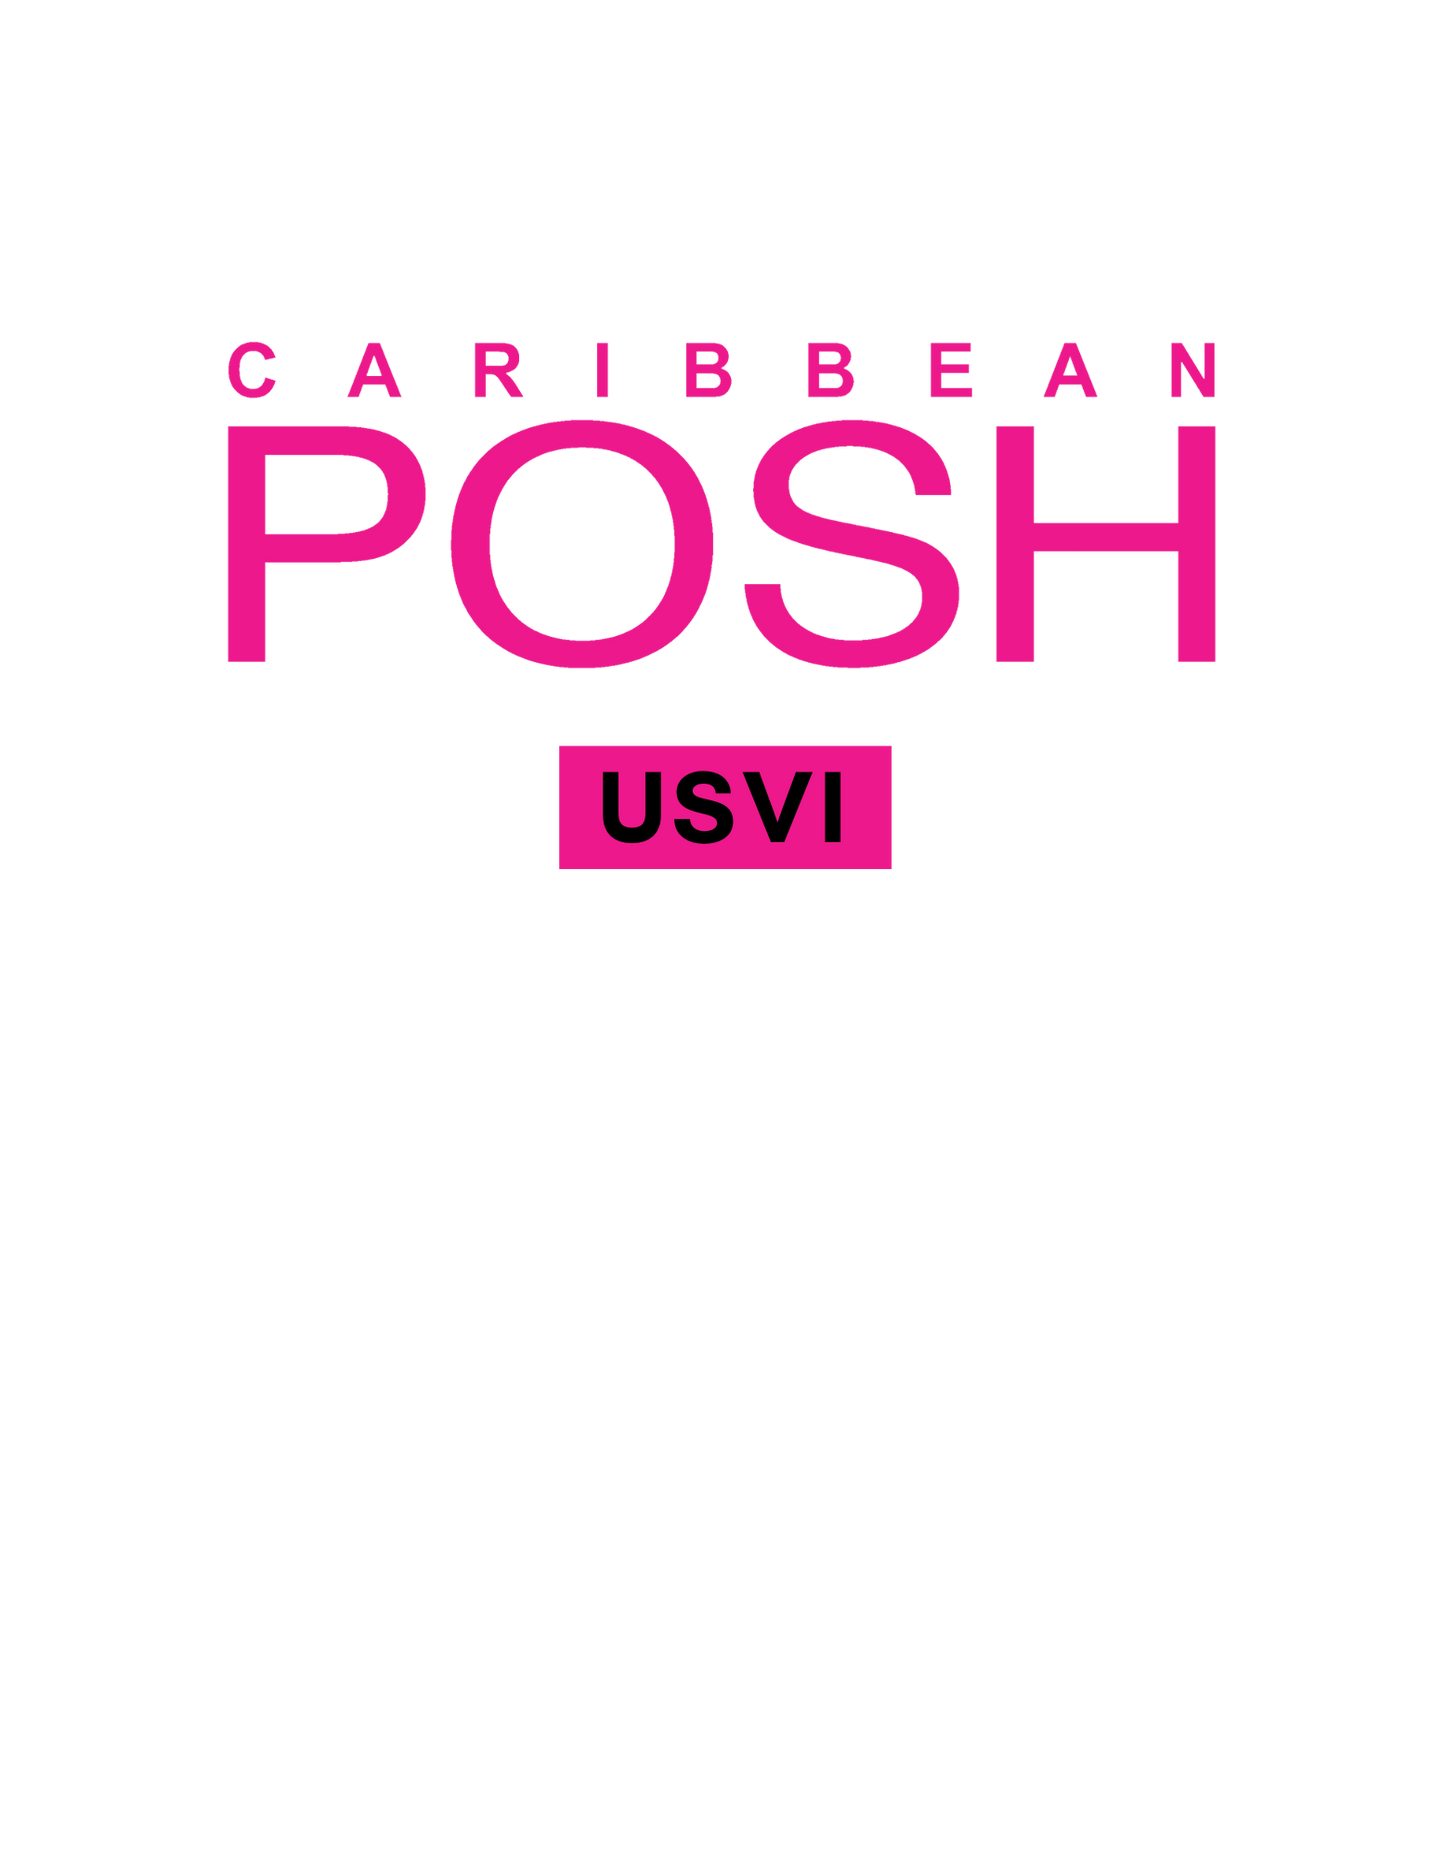 Caribbean POSH USVI